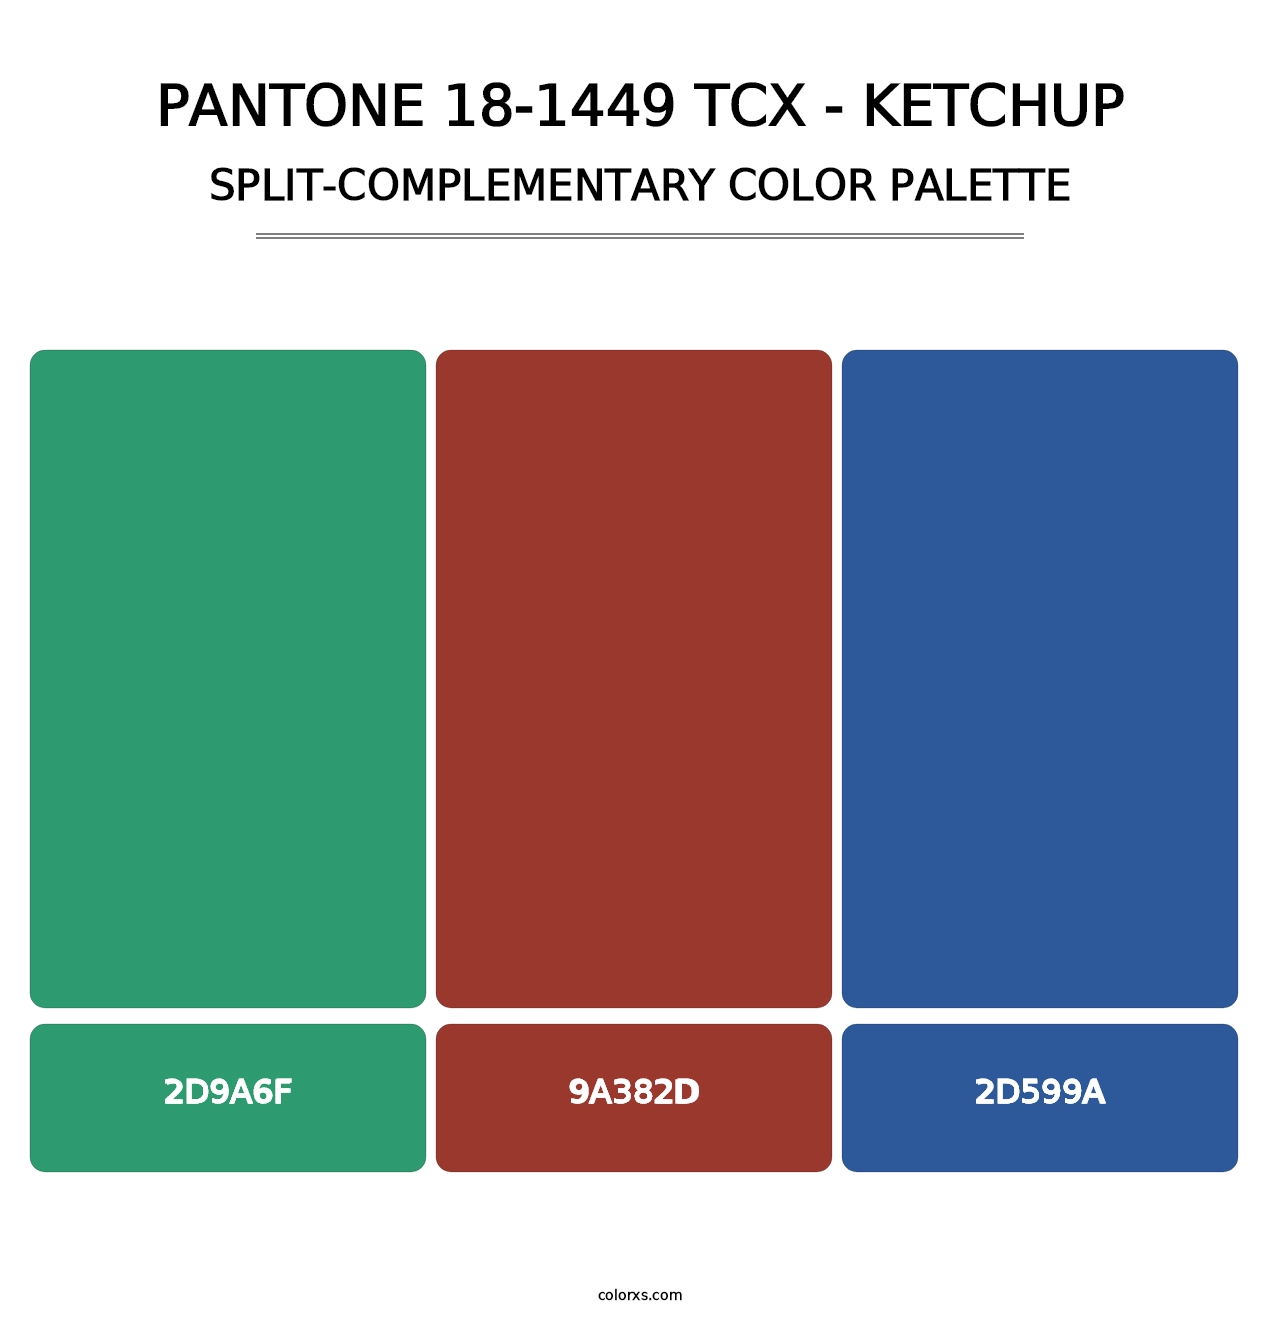 PANTONE 18-1449 TCX - Ketchup - Split-Complementary Color Palette